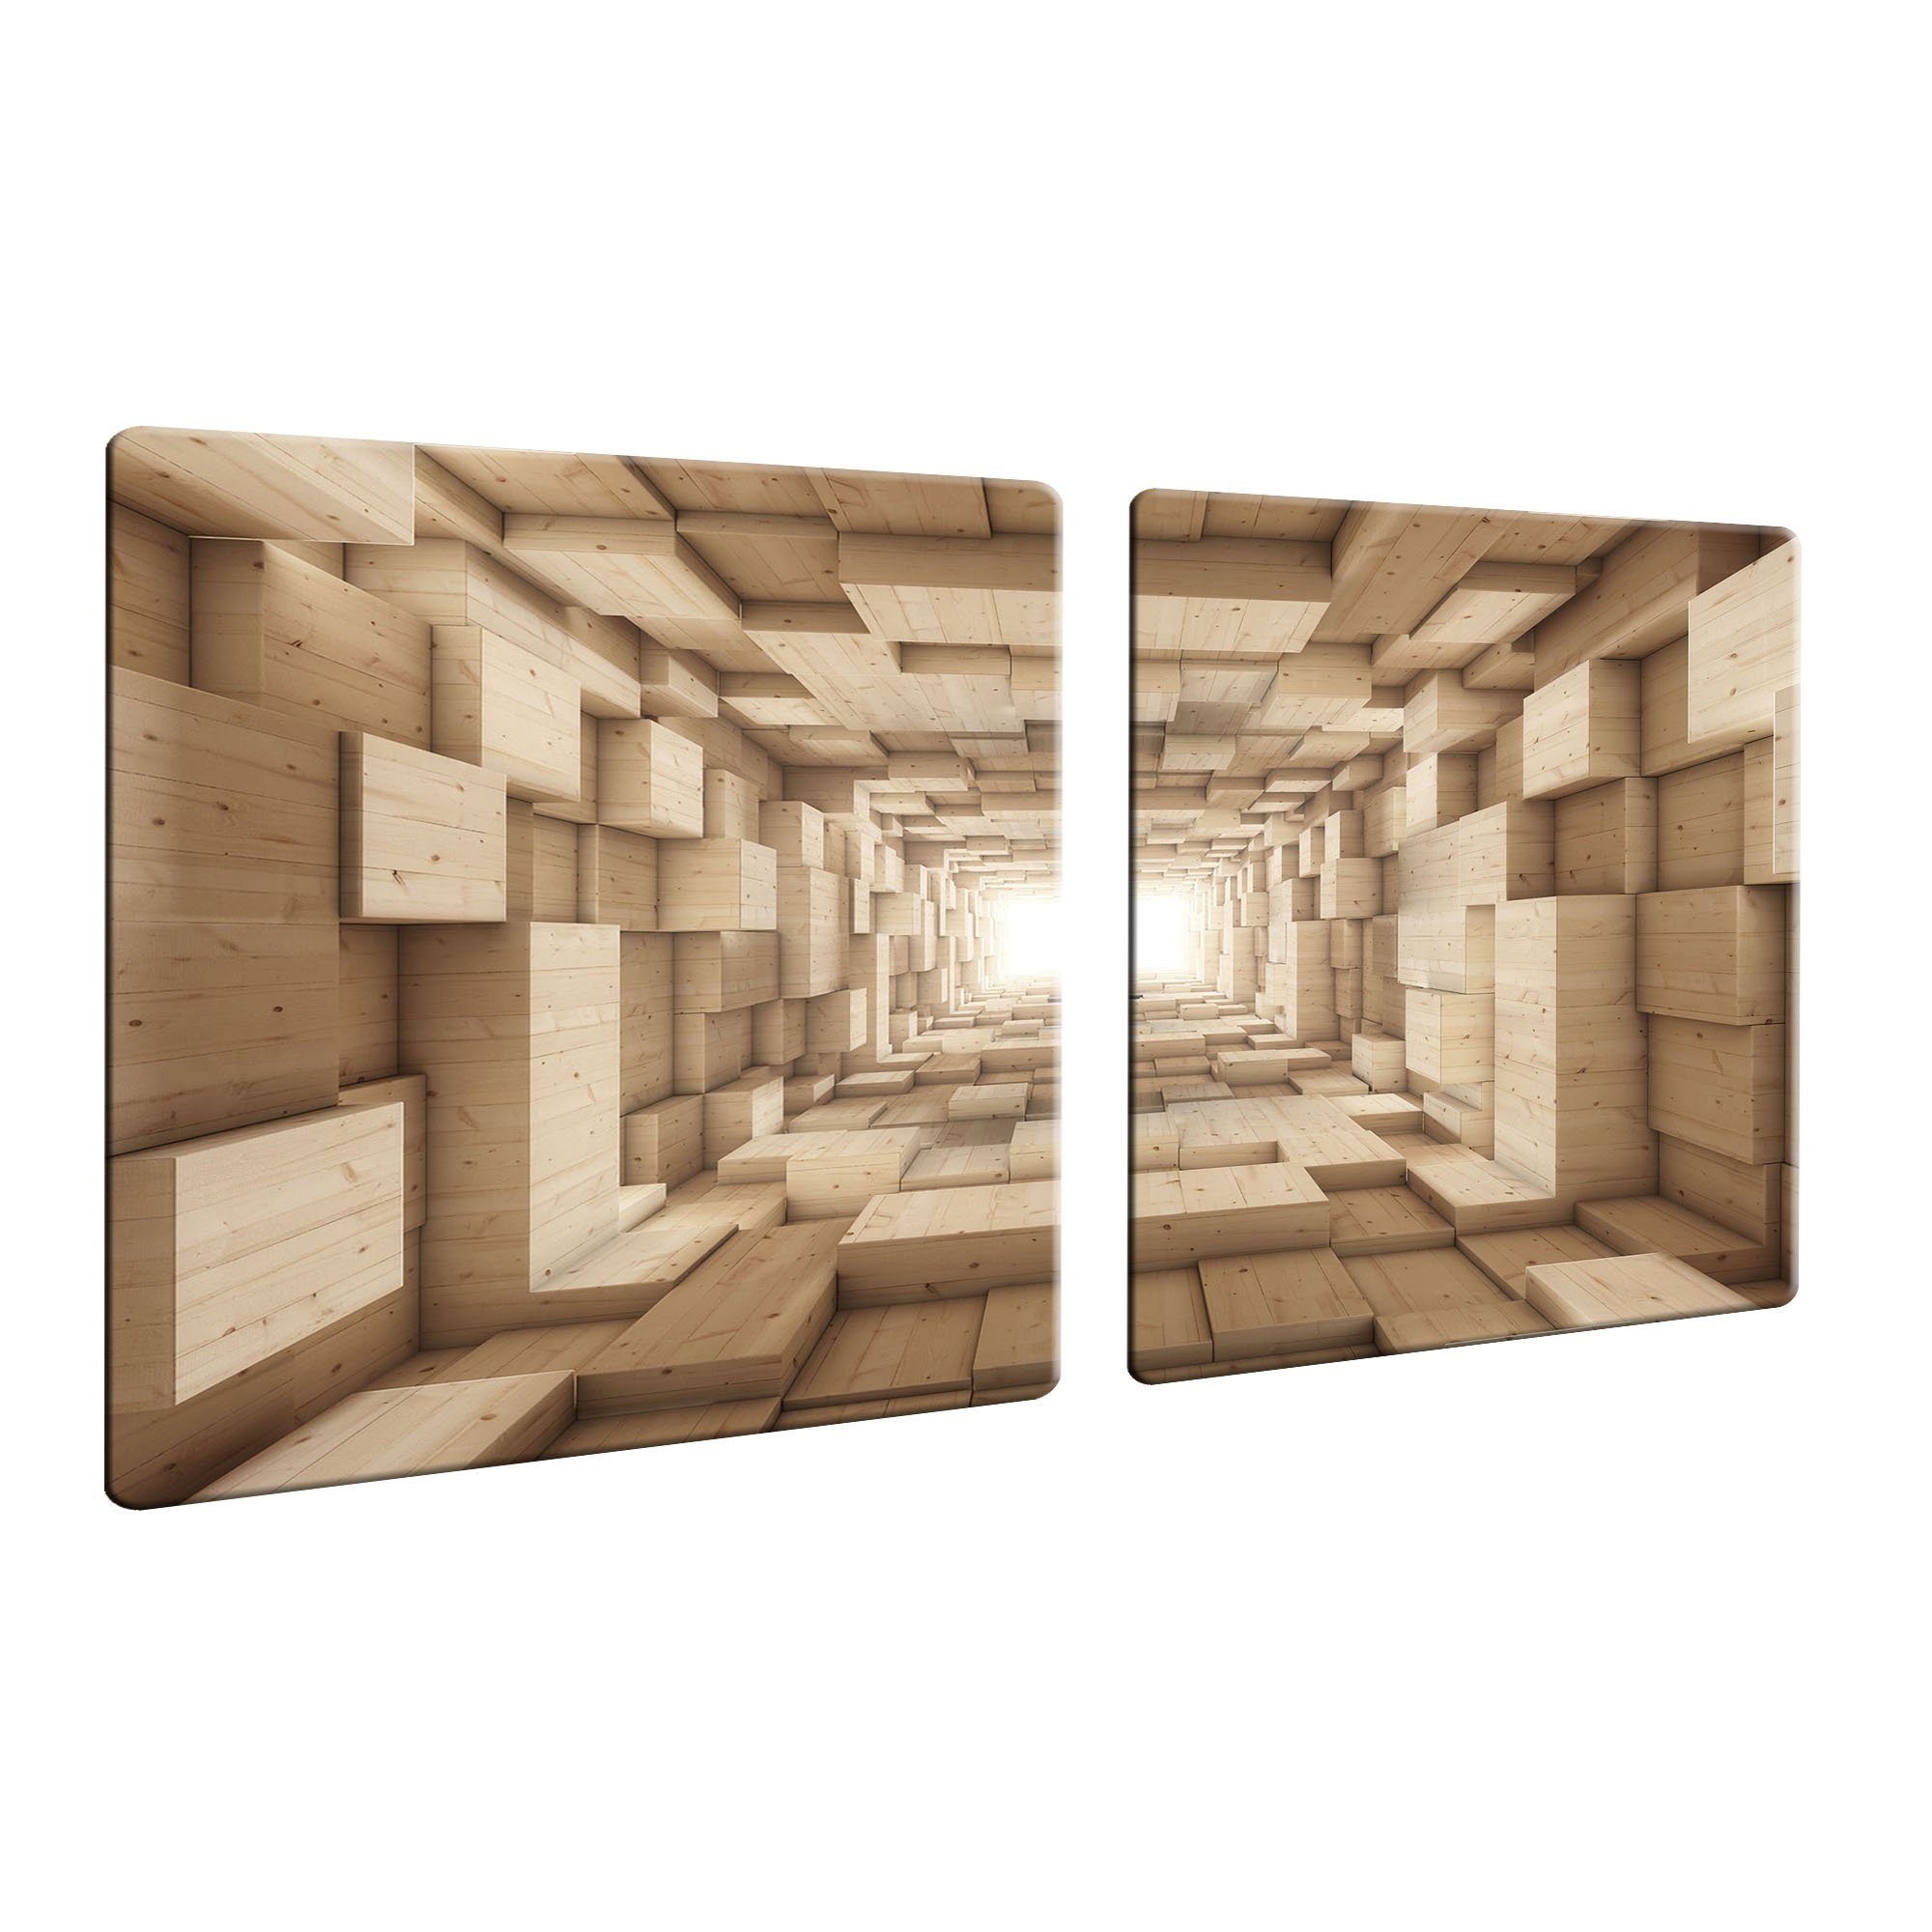 Herd-Abdeckplatte 2-teilig Holz Abstrakt Decorwelt 80x52 Ceranfeldabdeckung